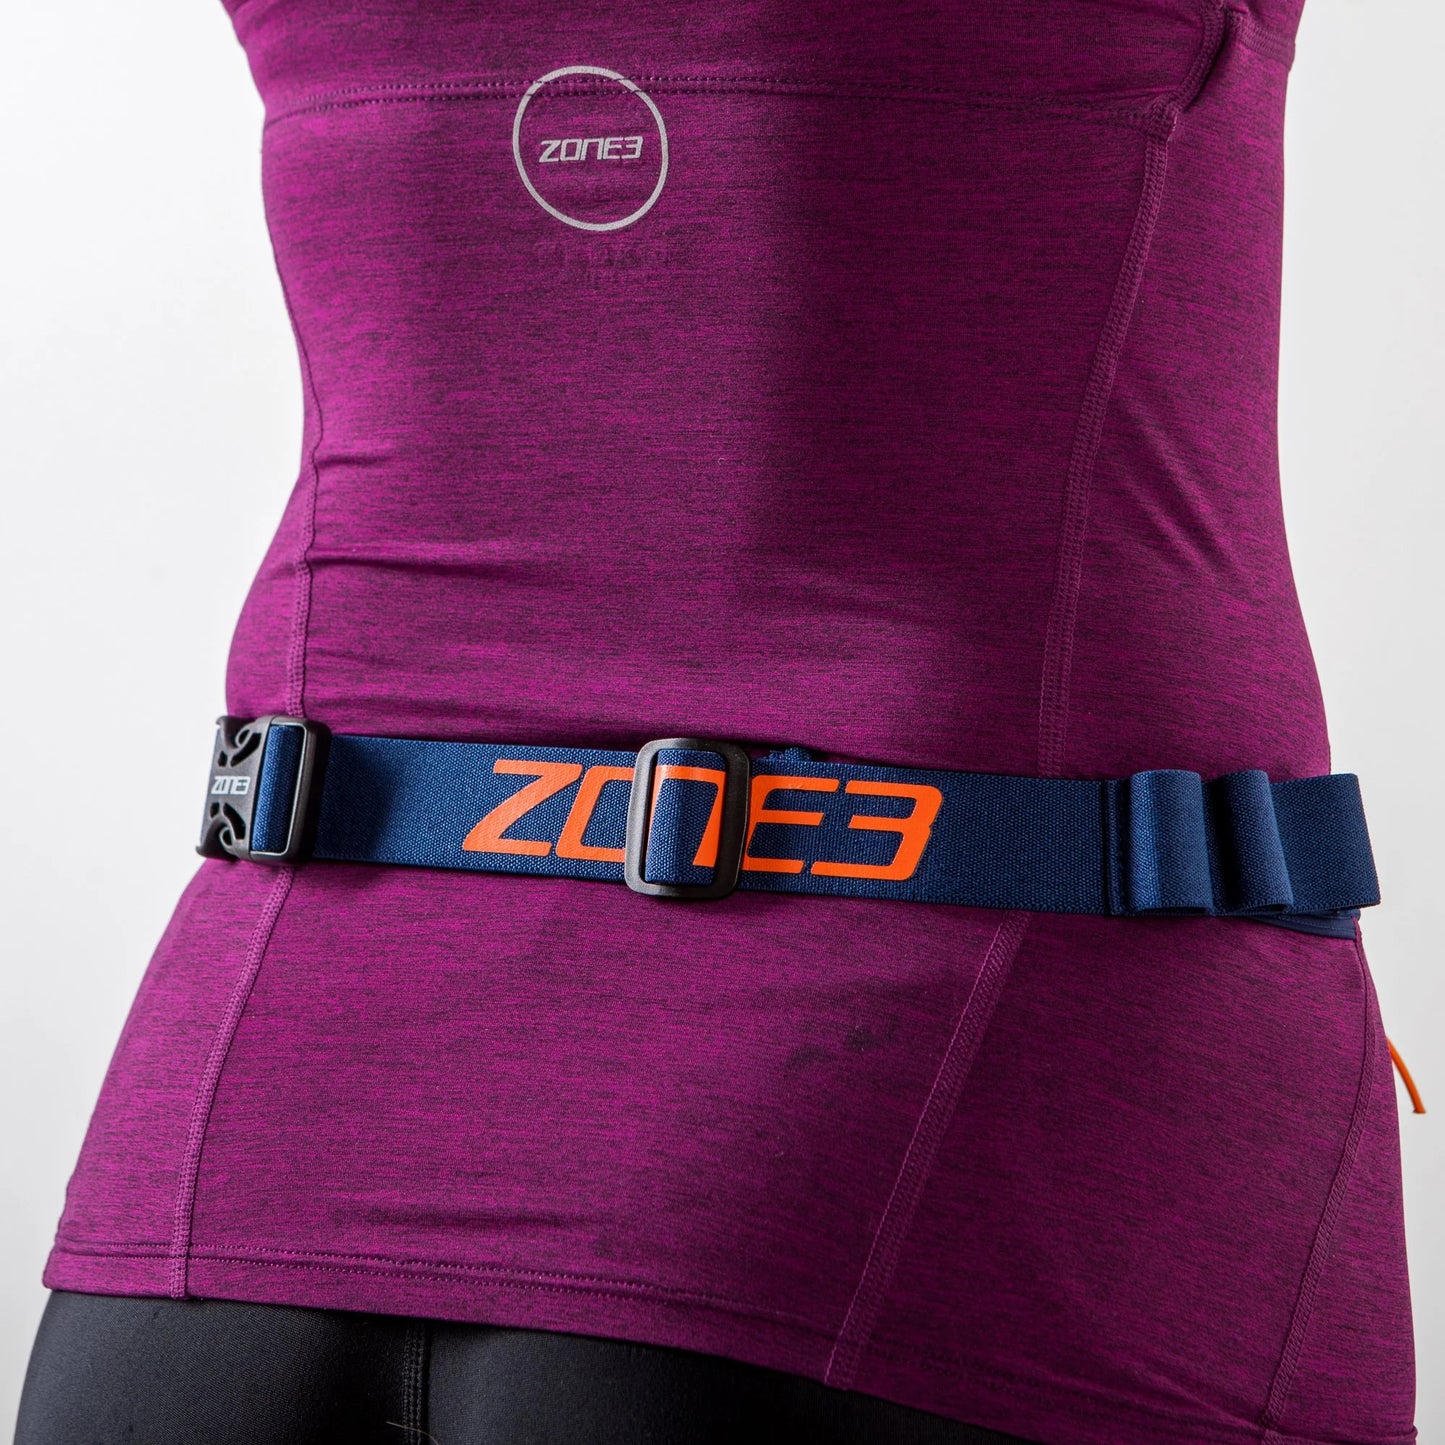 Zone3 Ultimate triathlon belt, racing &amp; running